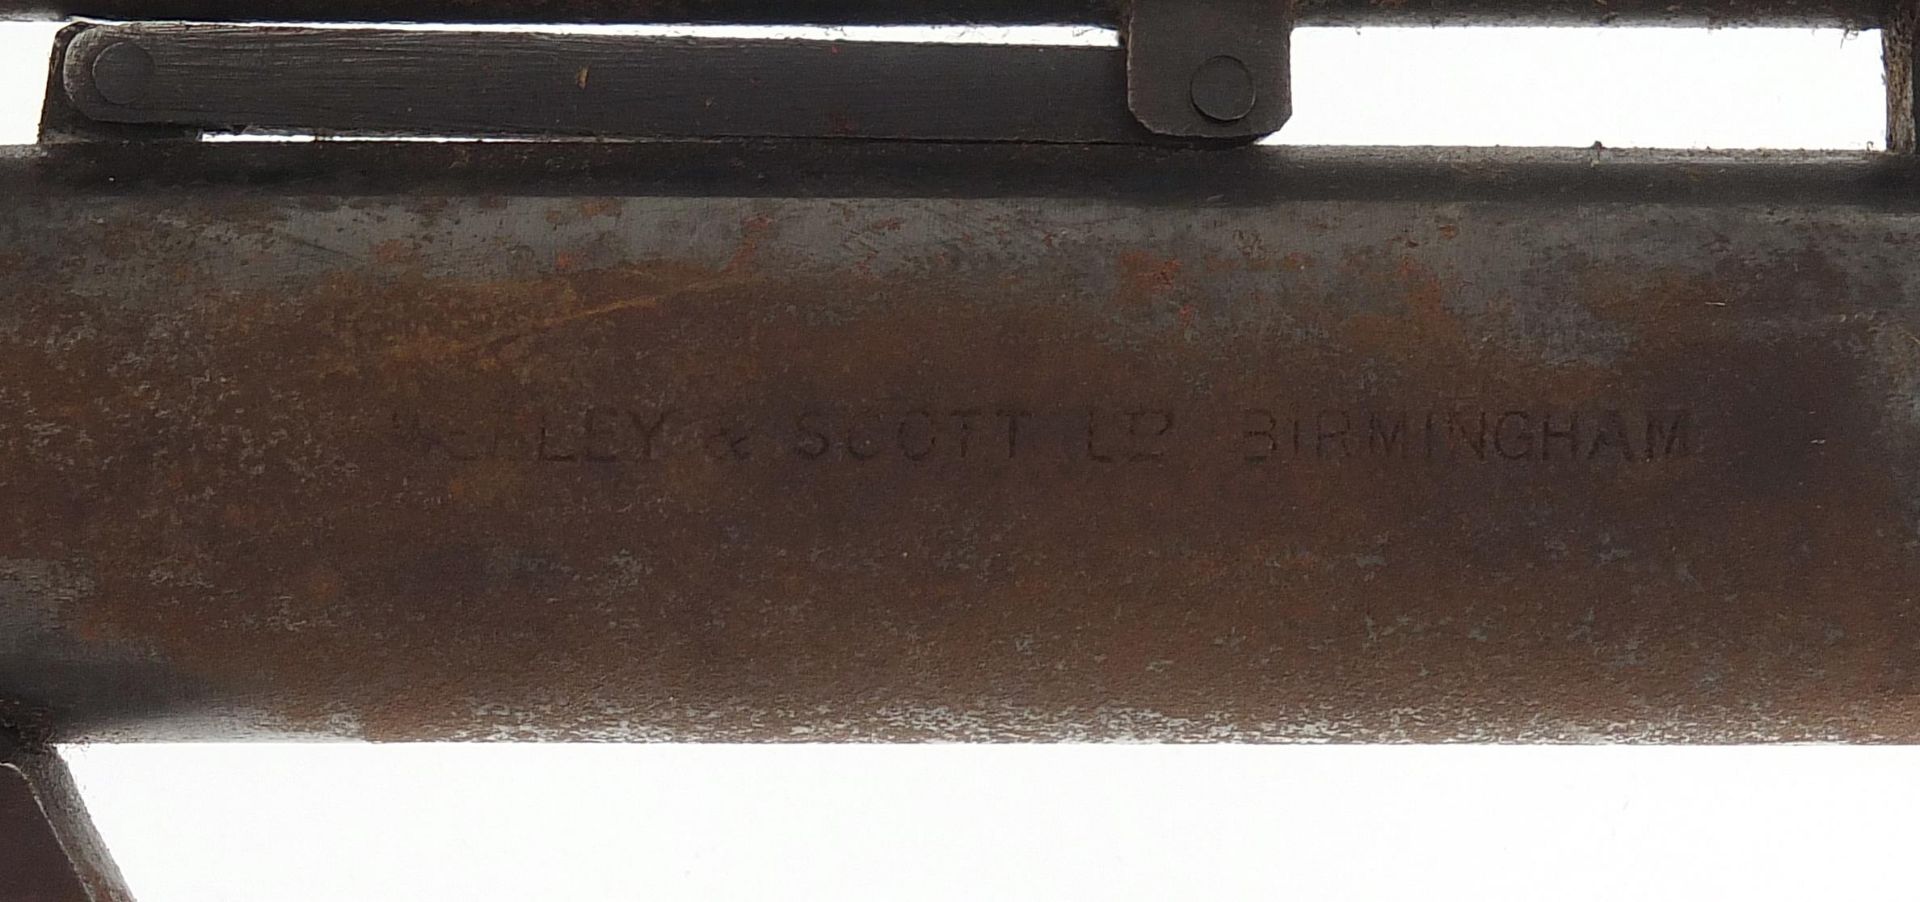 Vintage Webley Junior .177 air pistol by Webley & Scott impressed J10922 - Image 5 of 5